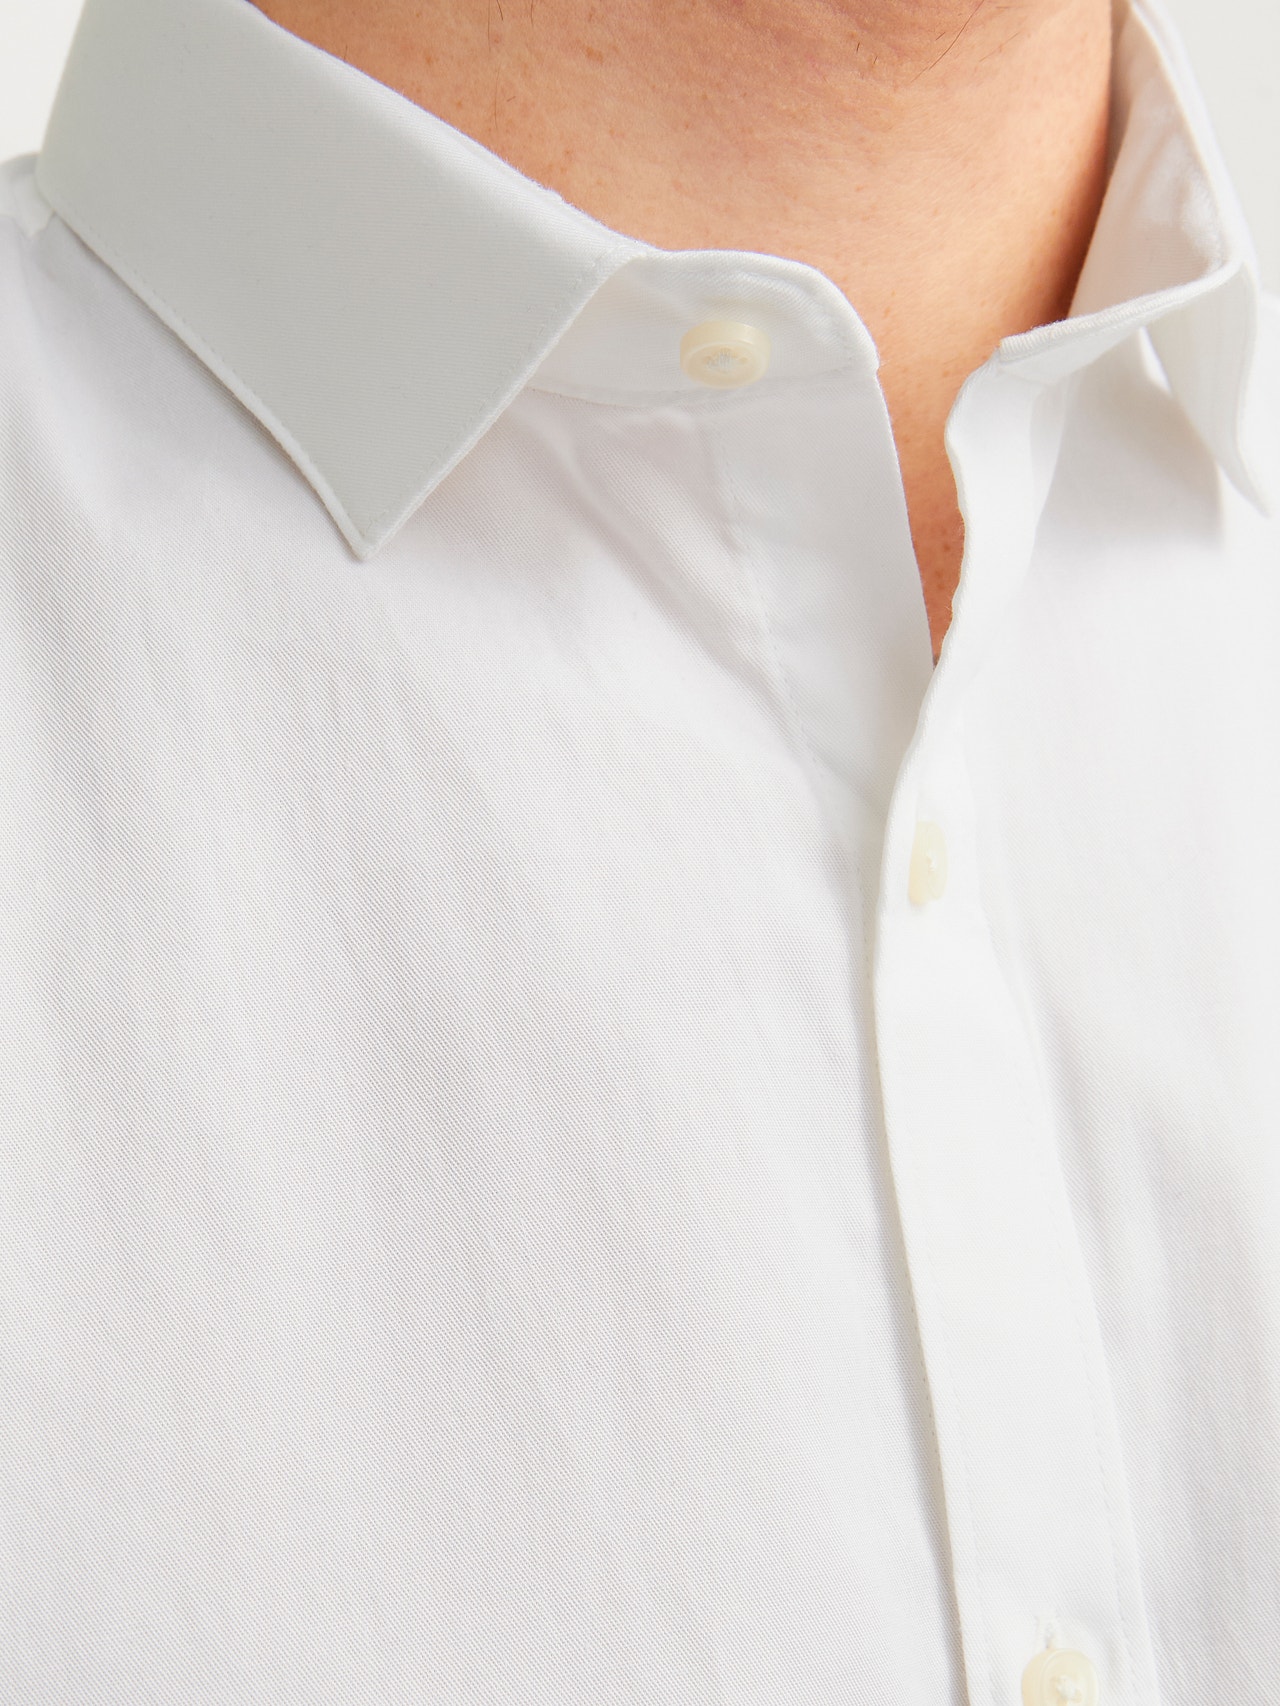 Jack & Jones Slim Fit Dress shirt -White - 12201905